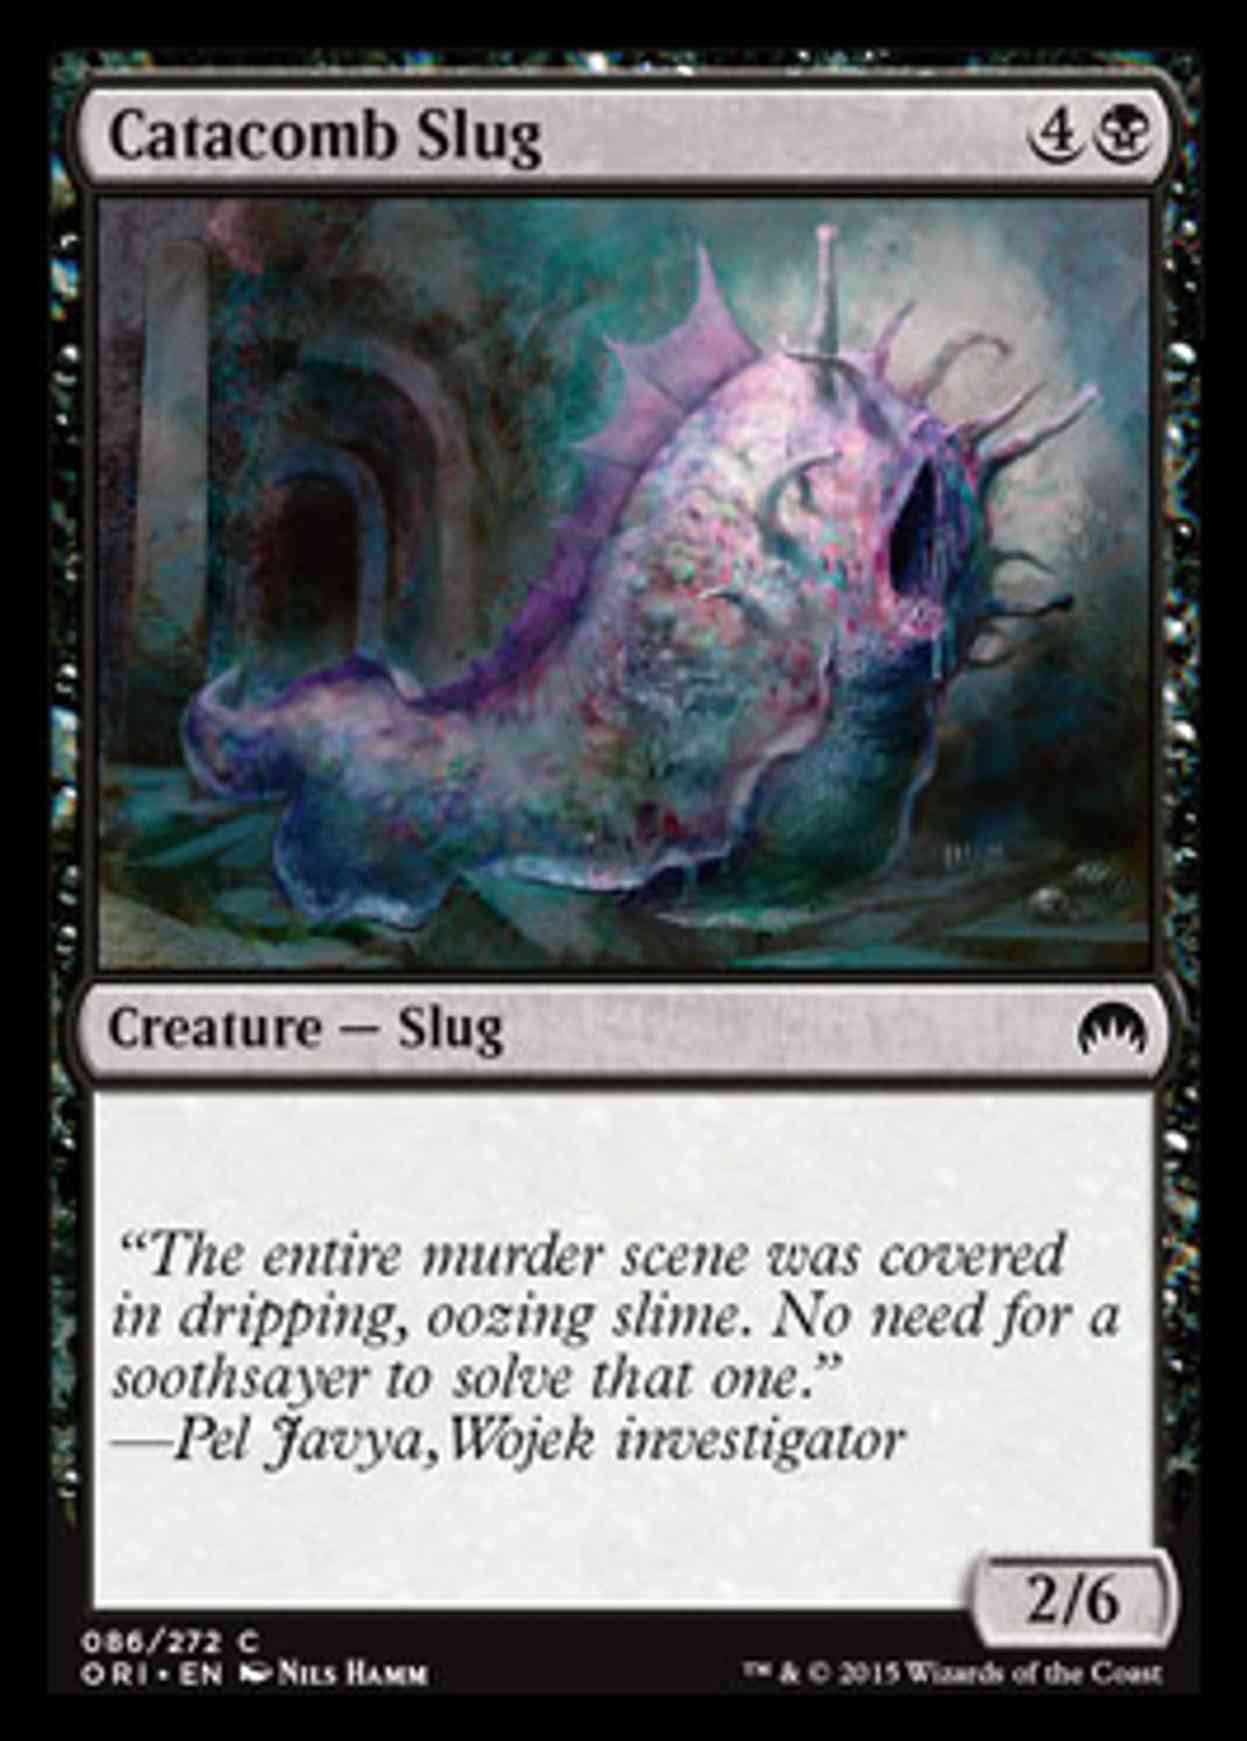 Catacomb Slug magic card front